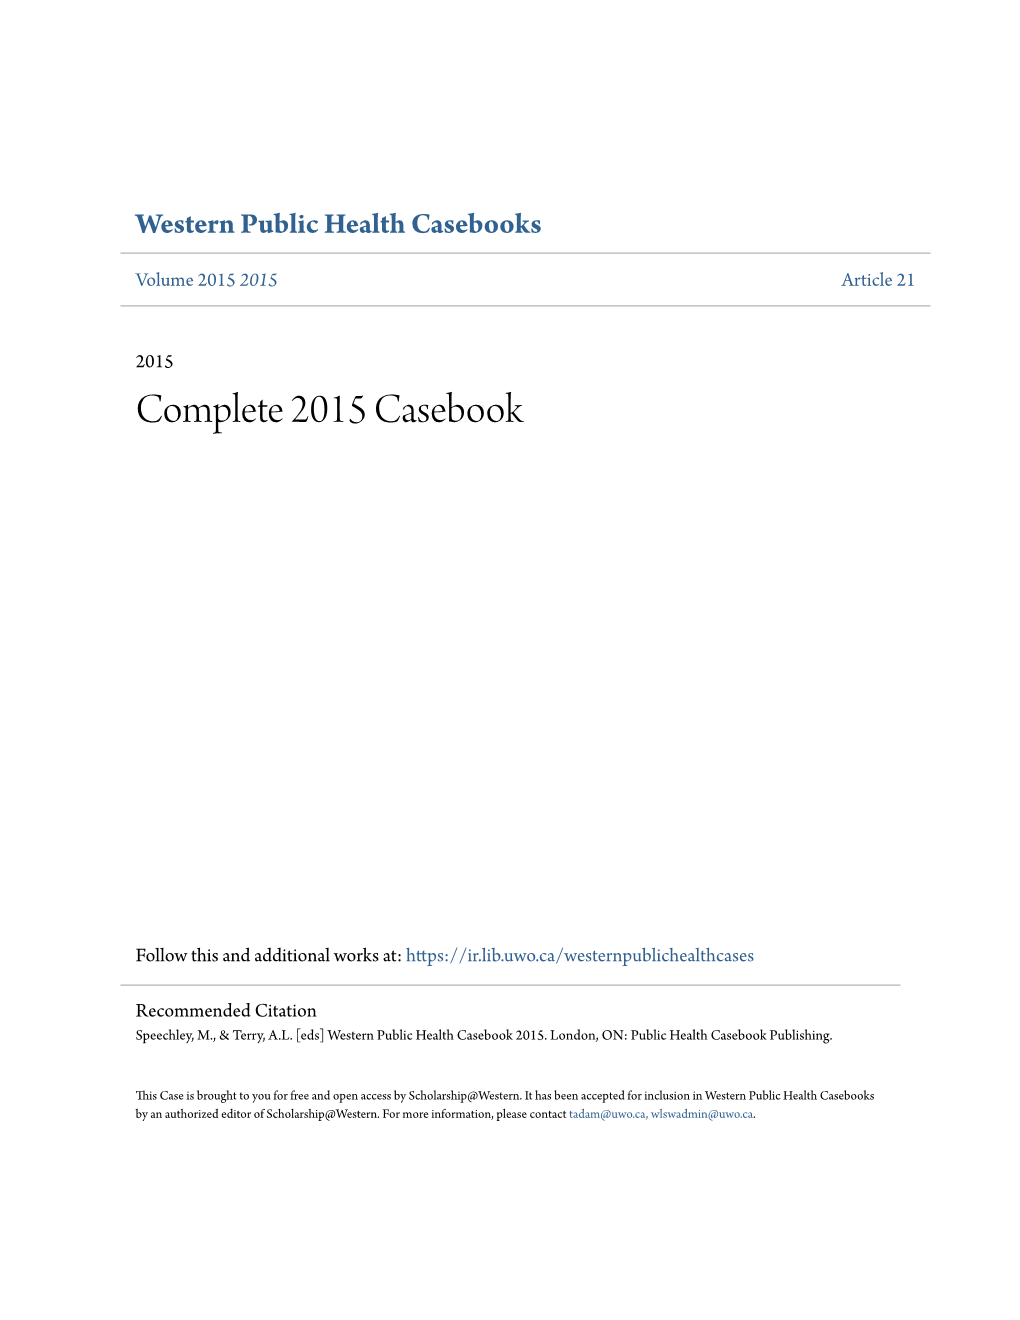 Complete 2015 Casebook